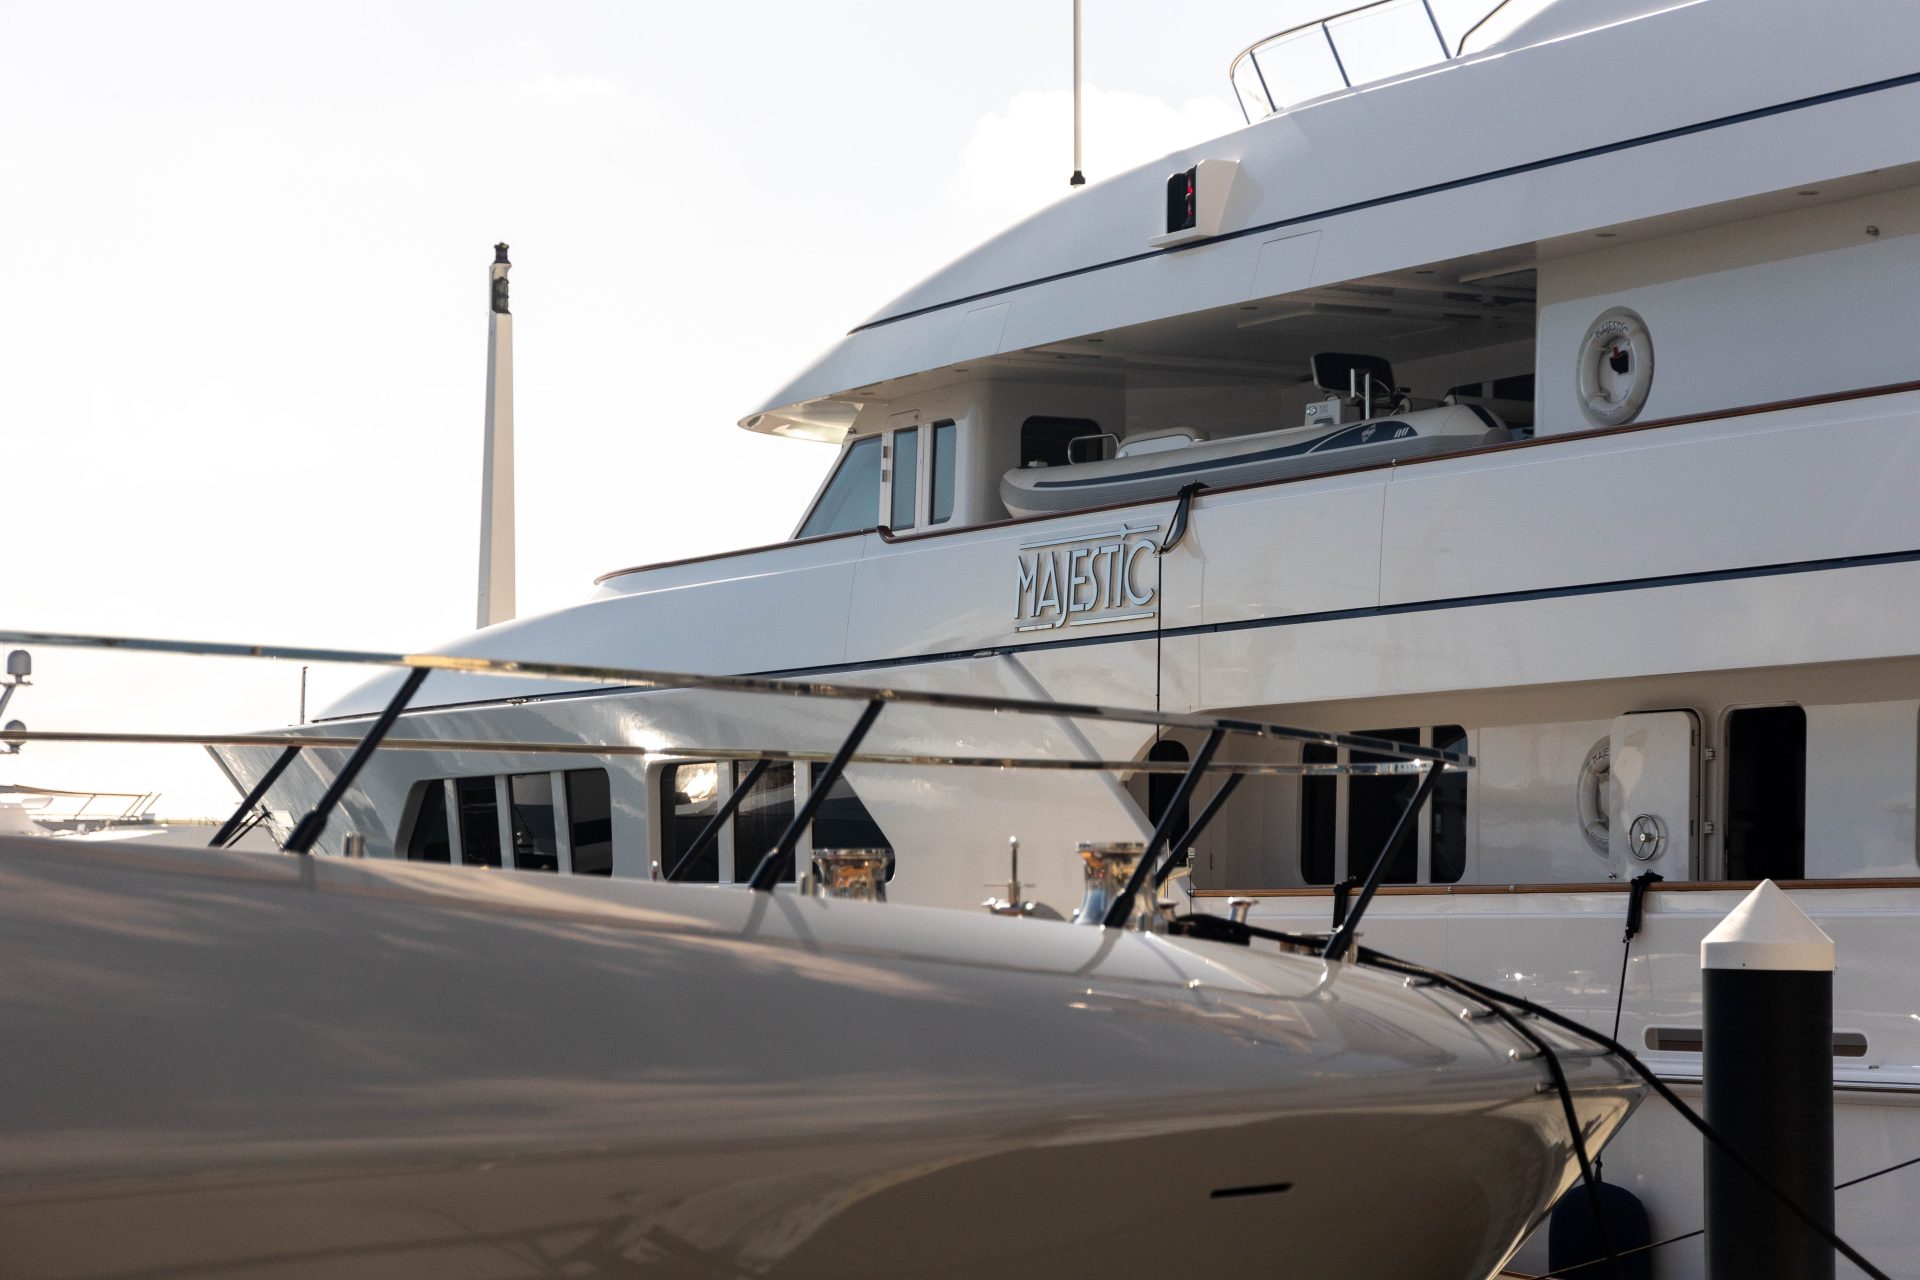 yacht sales jobs london